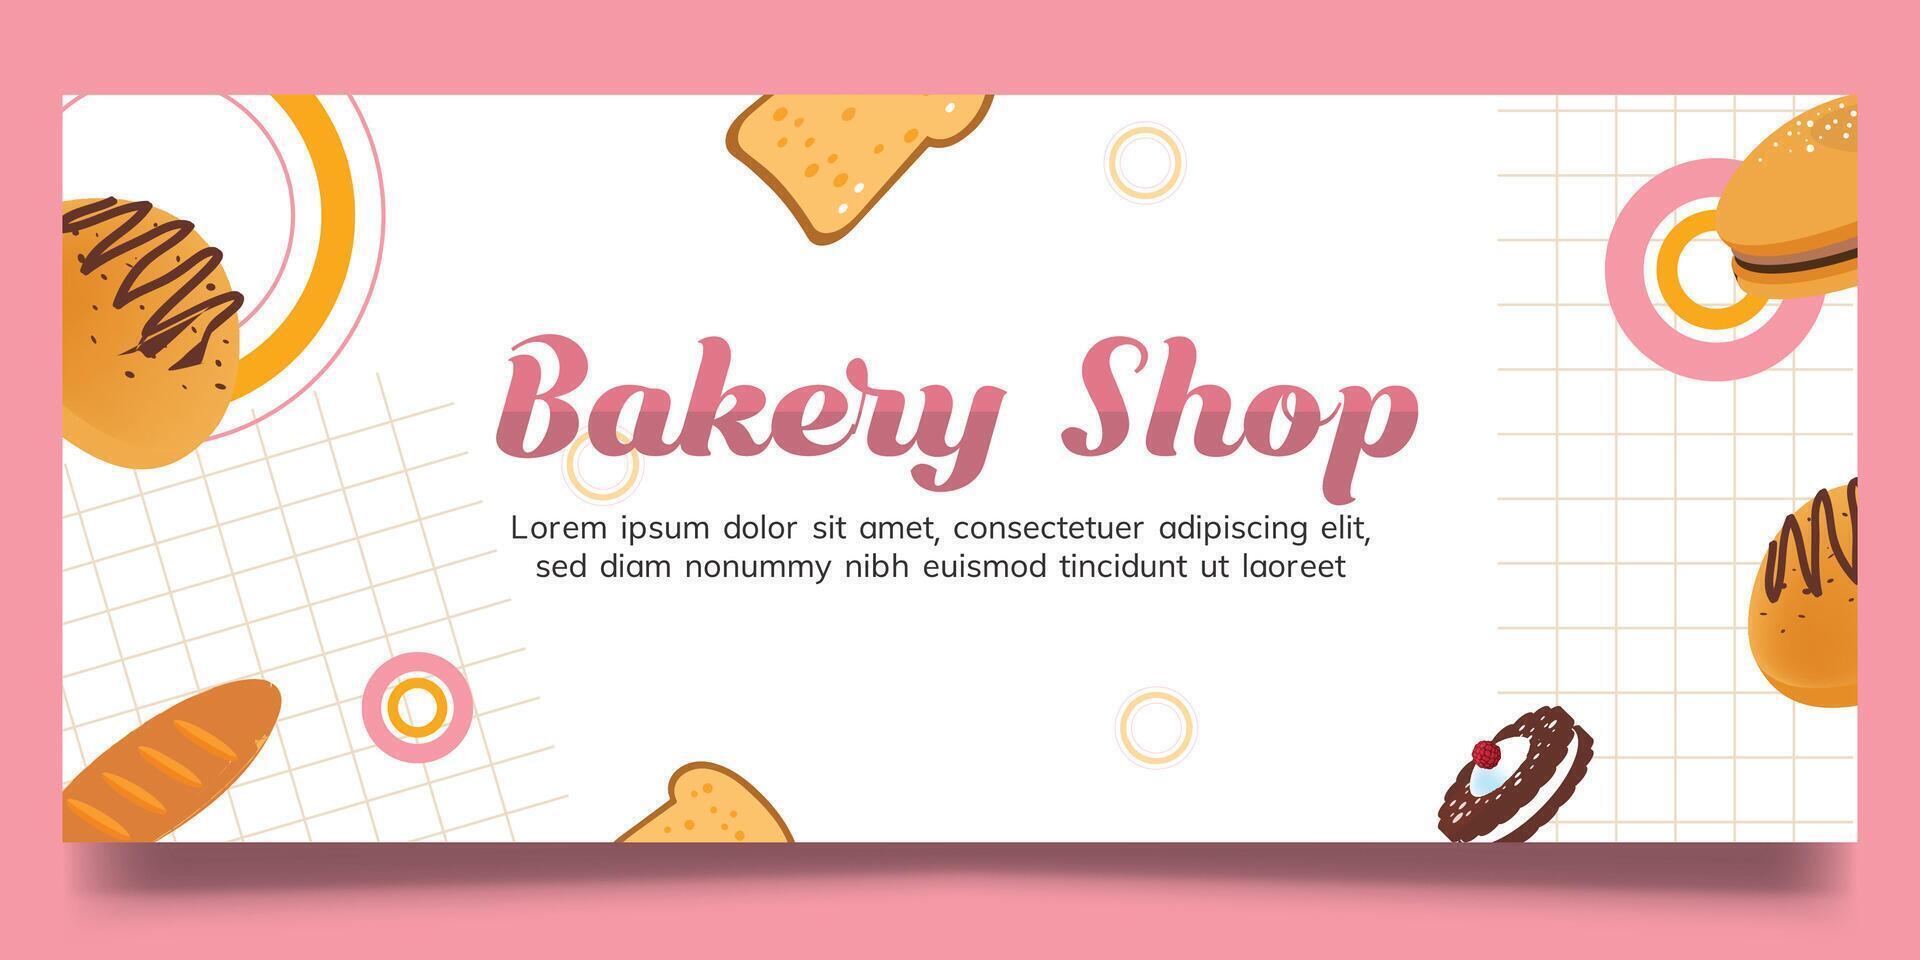 Bakery shop and food shop banner design vector